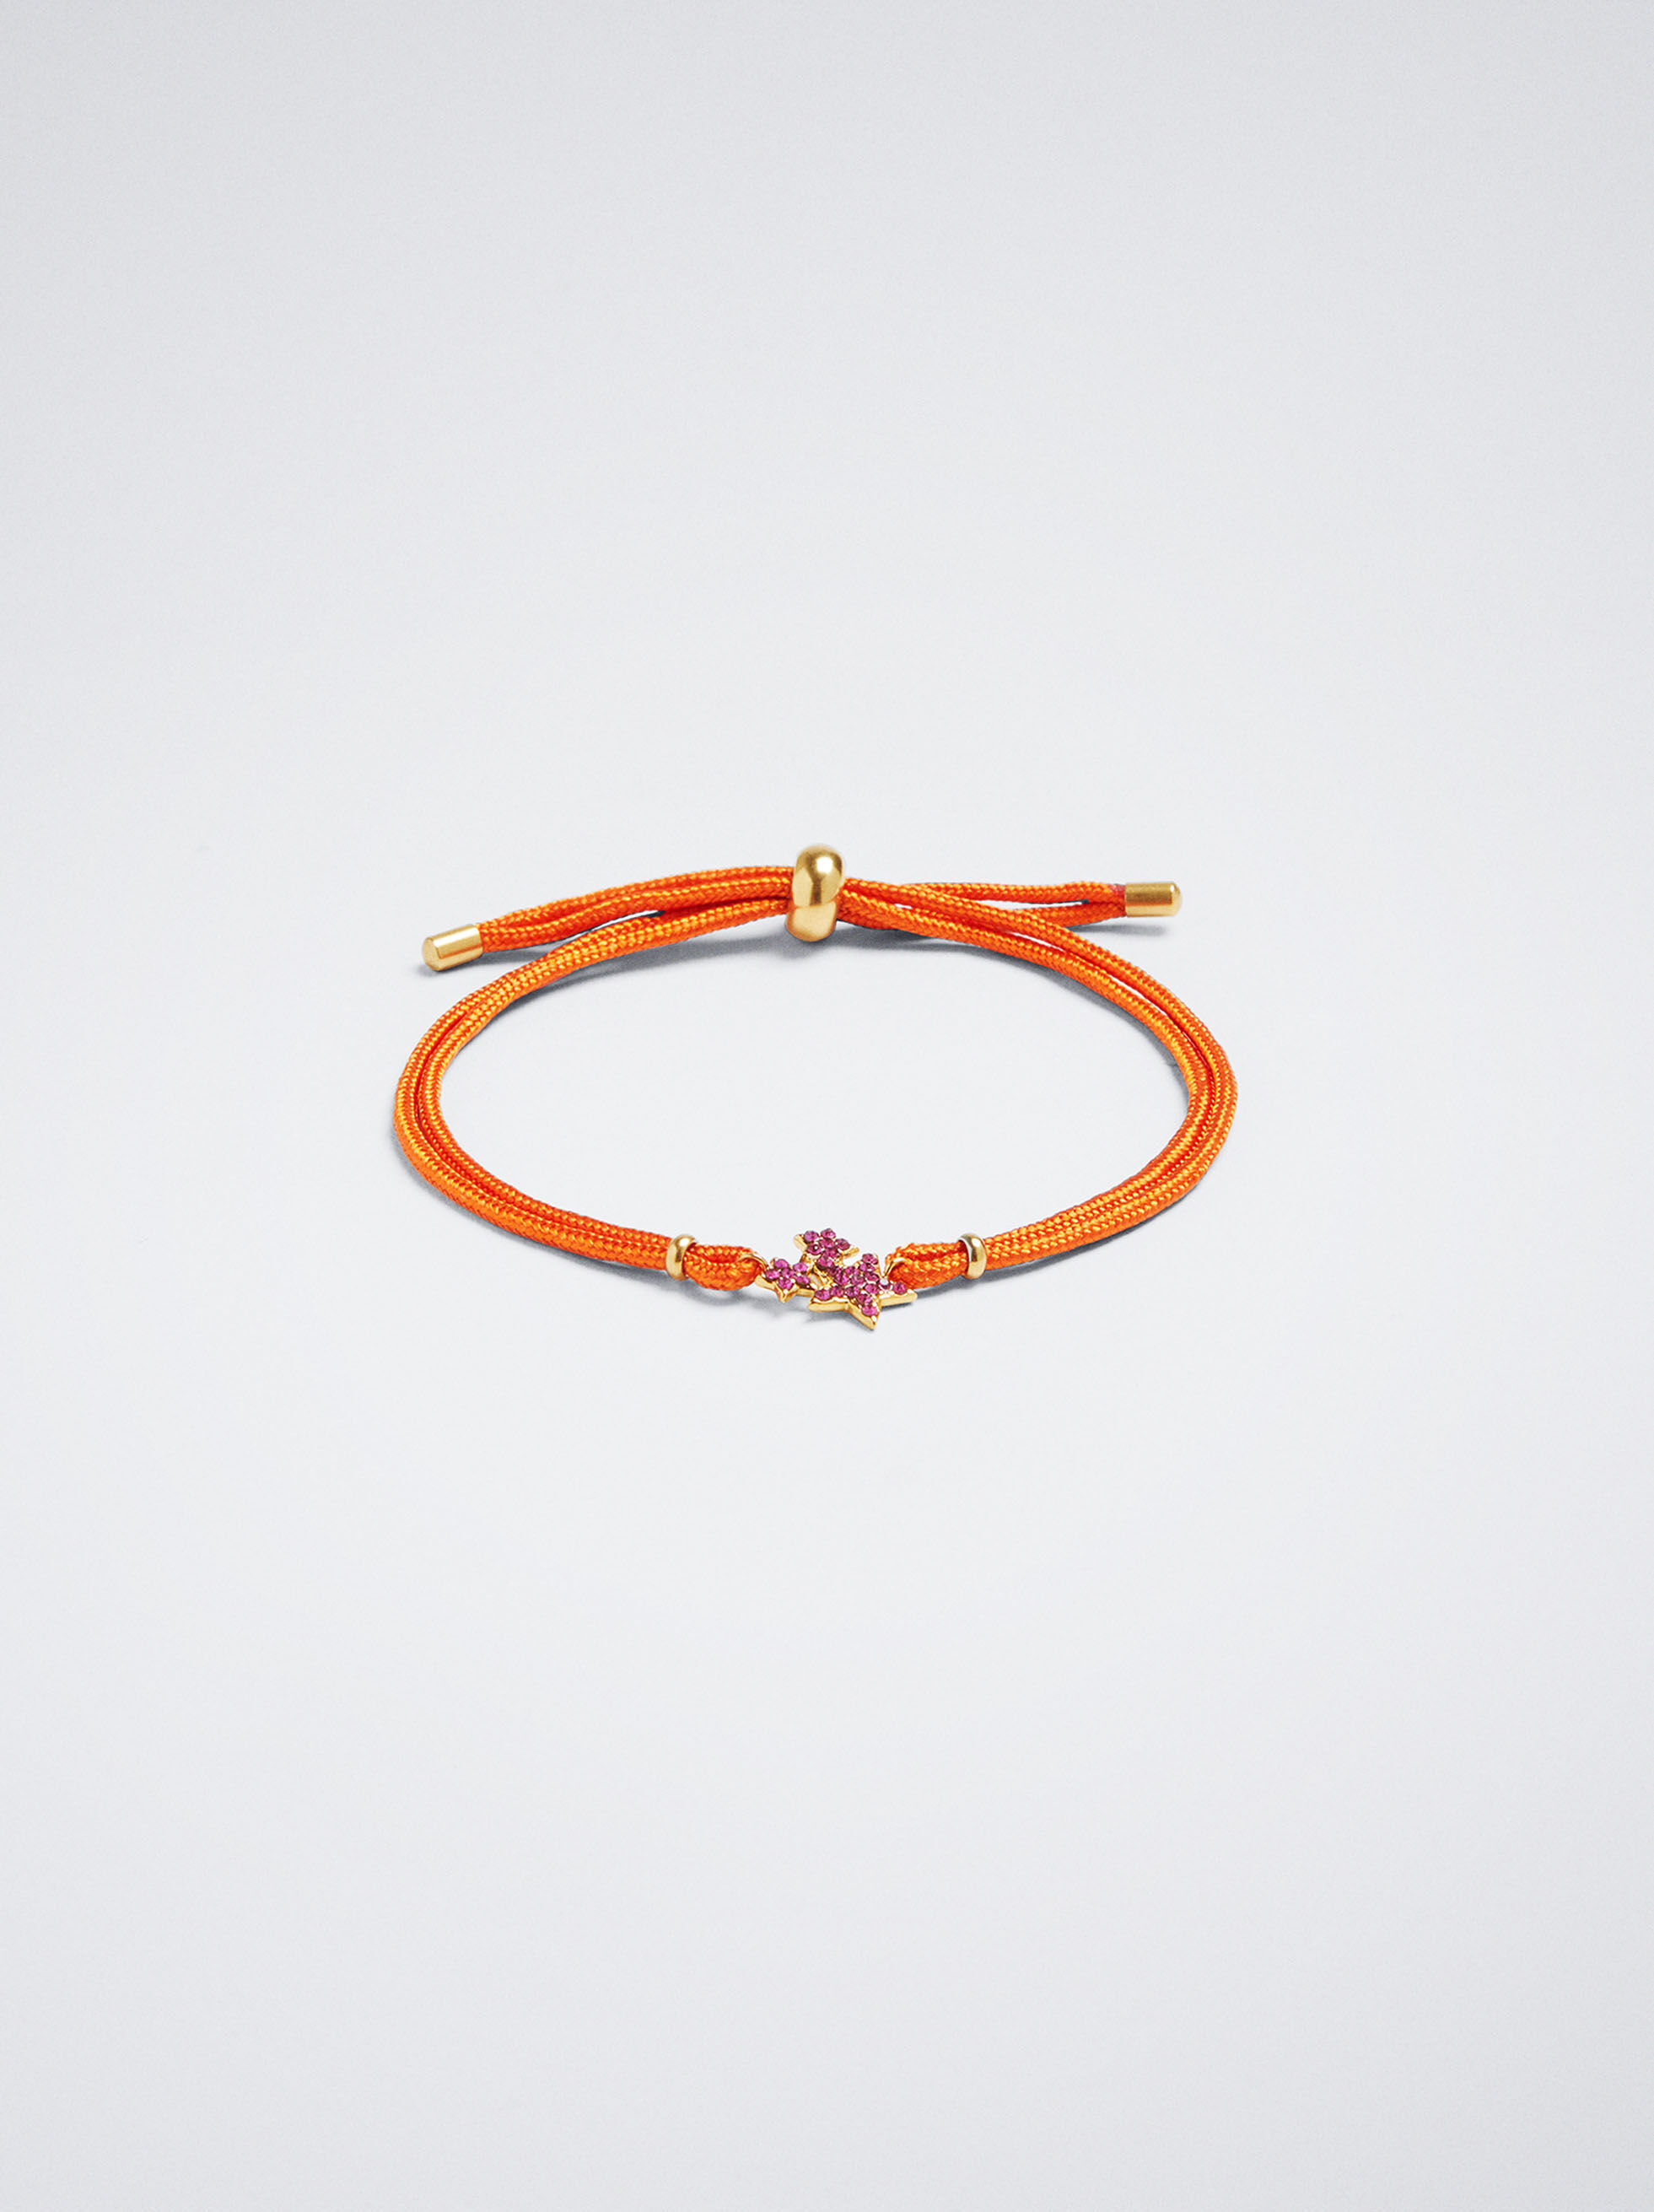 Cartier Love Bracelet String Flash Sales - www.edoc.com.vn 1693485461